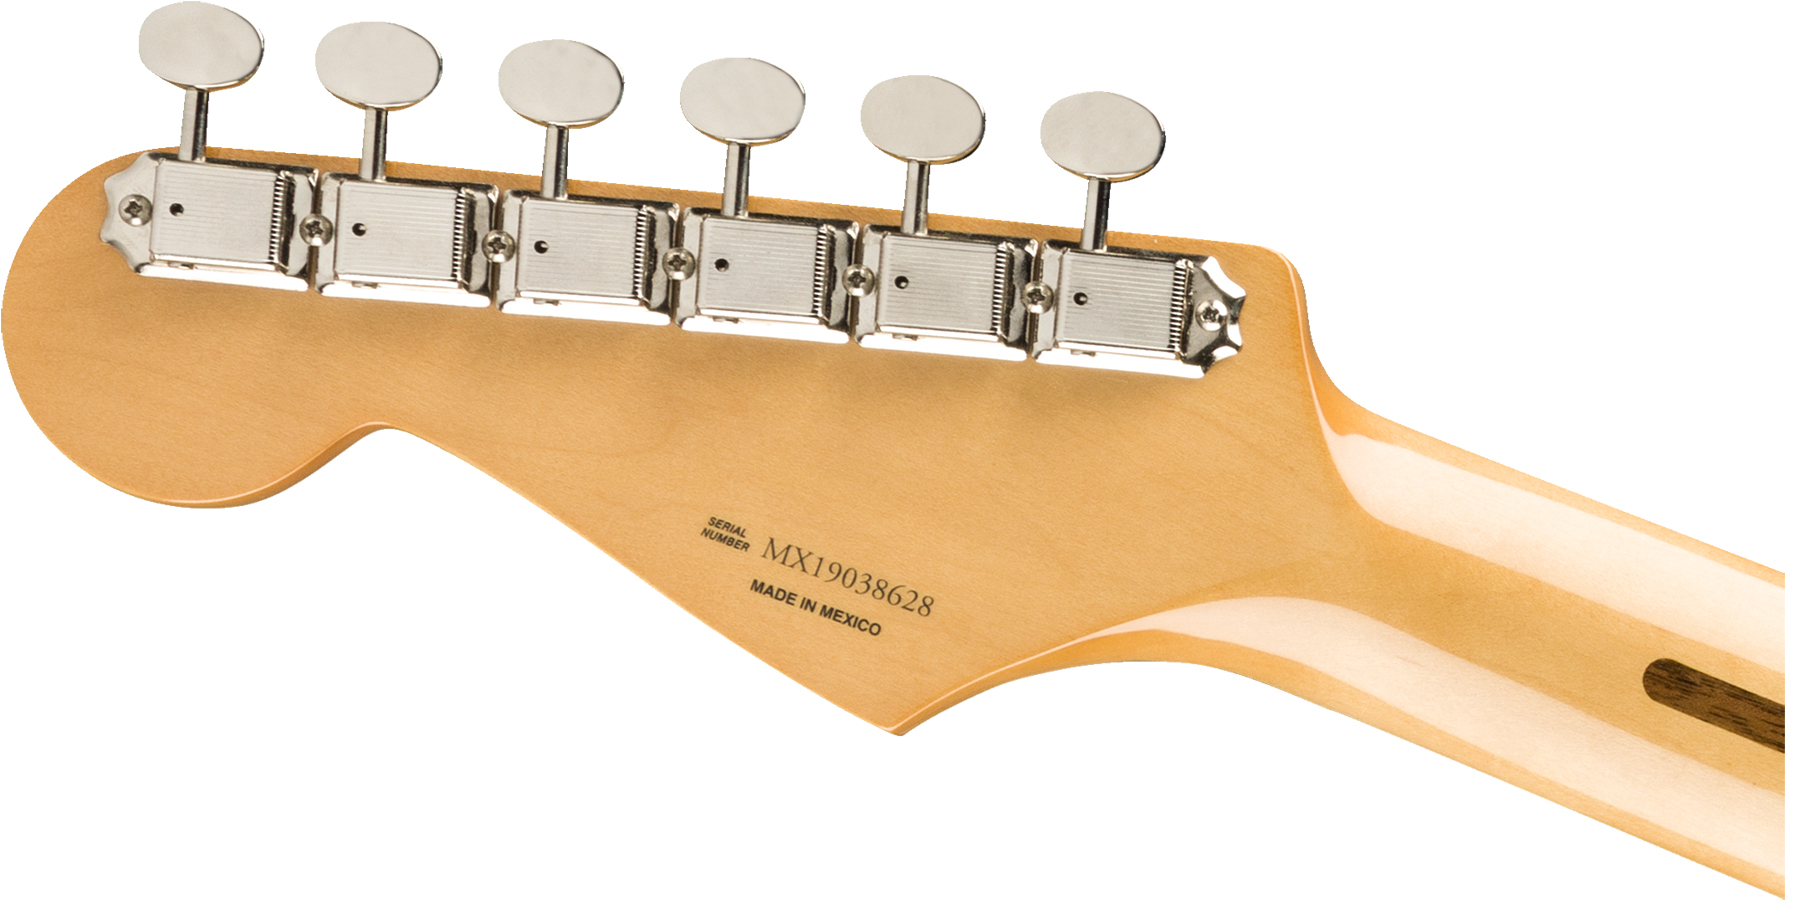 Fender Strat 50s Vintera Vintage Mex Mn - White Blonde - Str shape electric guitar - Variation 3